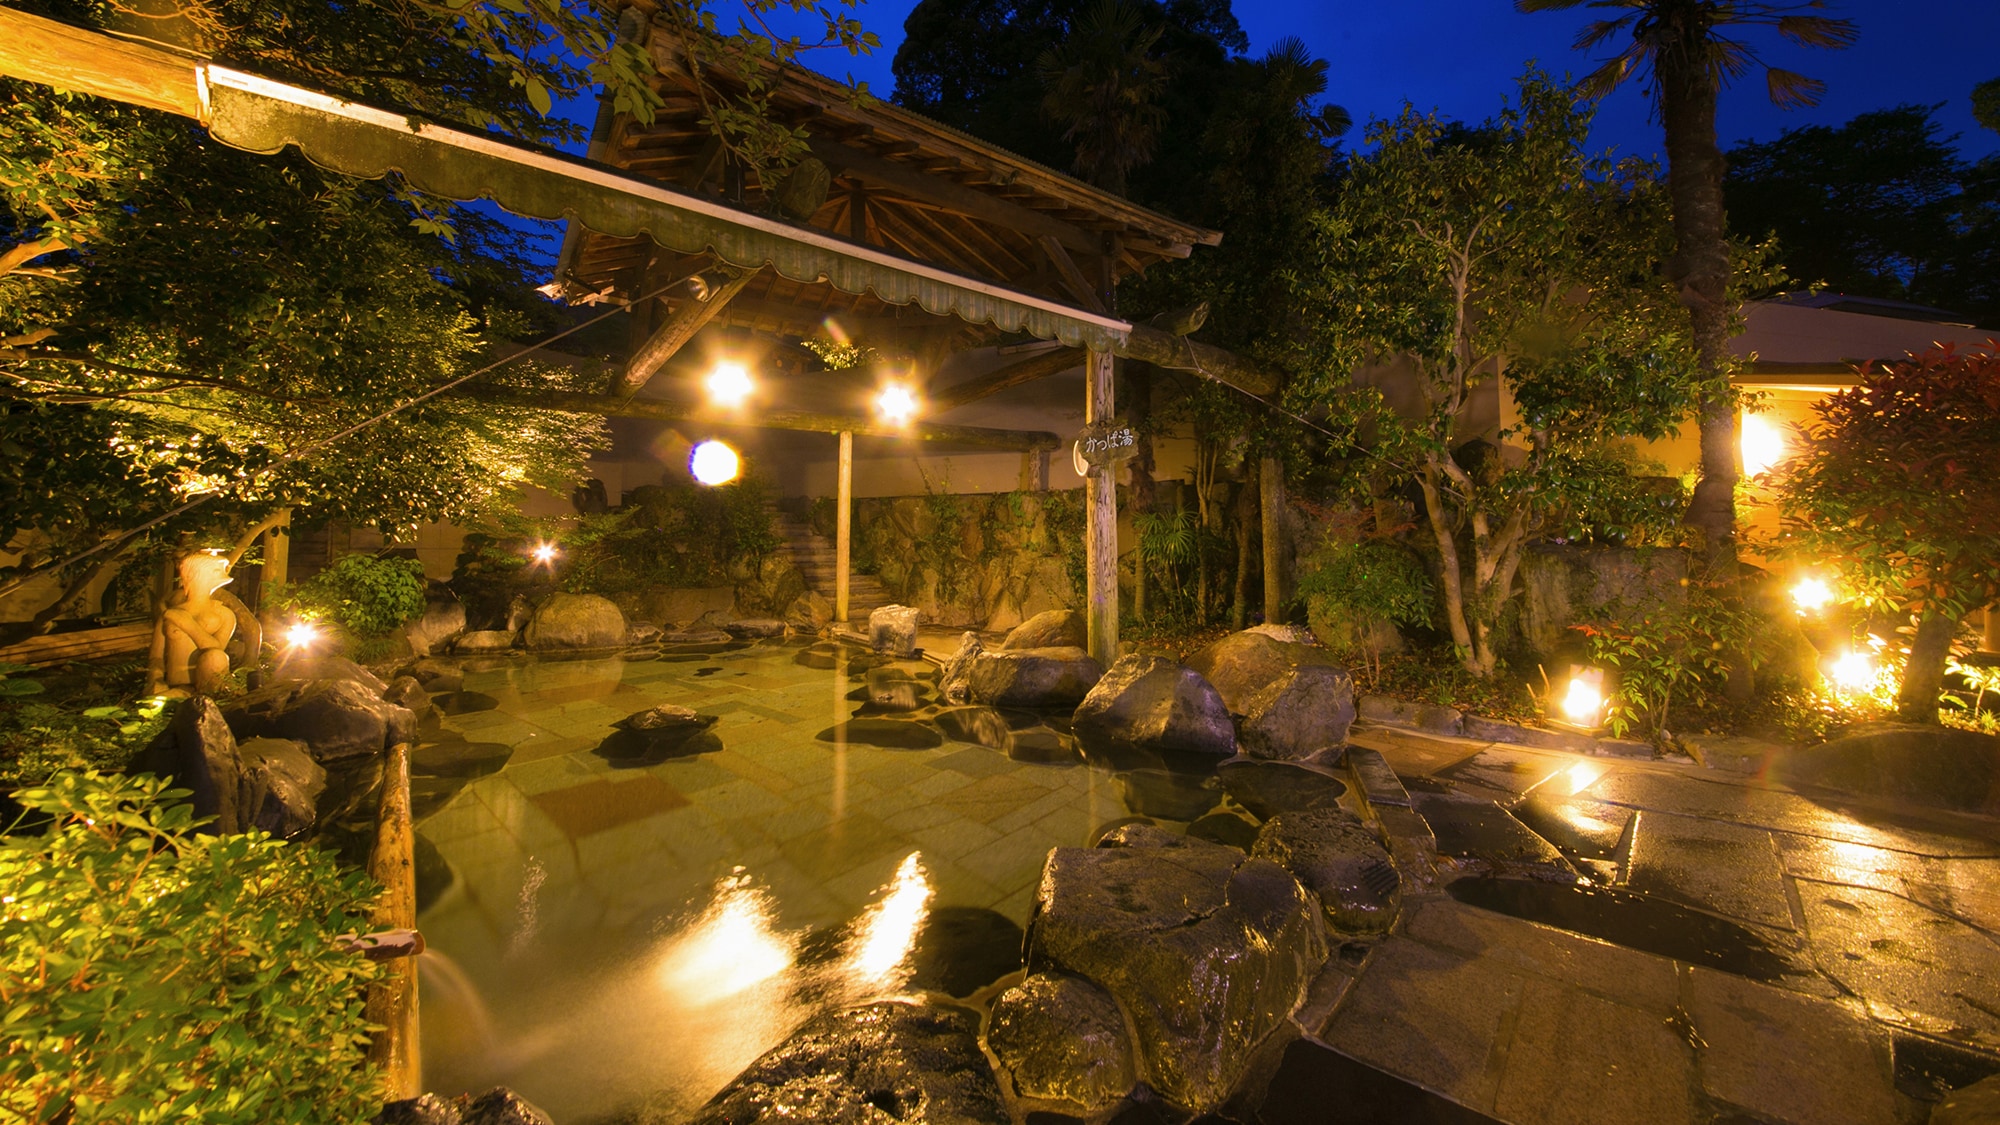 ◆ Yuzen no Sato (open-air, men's bath)